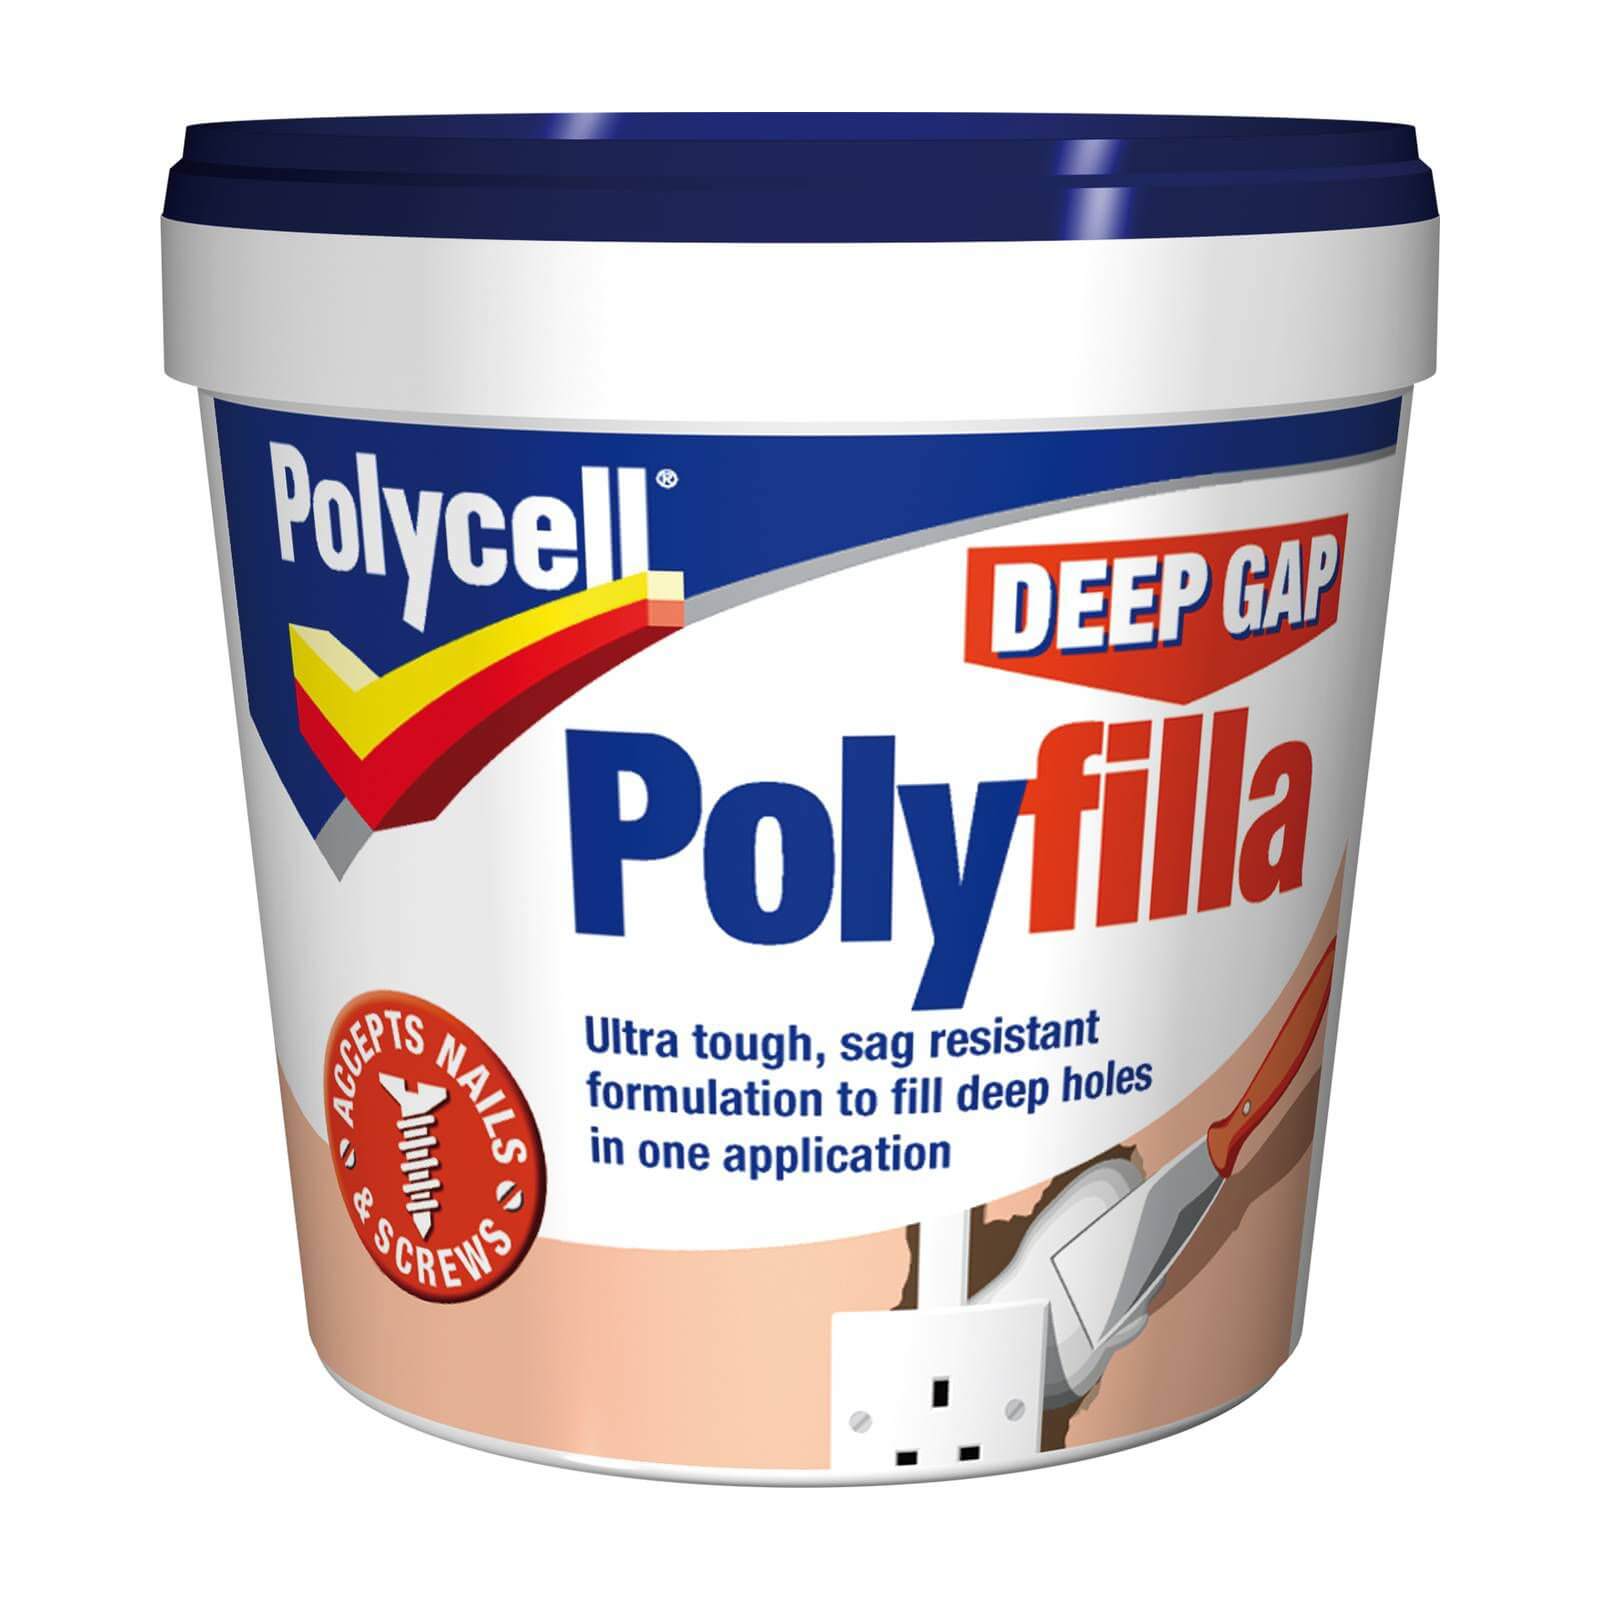 Photo of Polycell Deep Gap Polyfilla - 1l